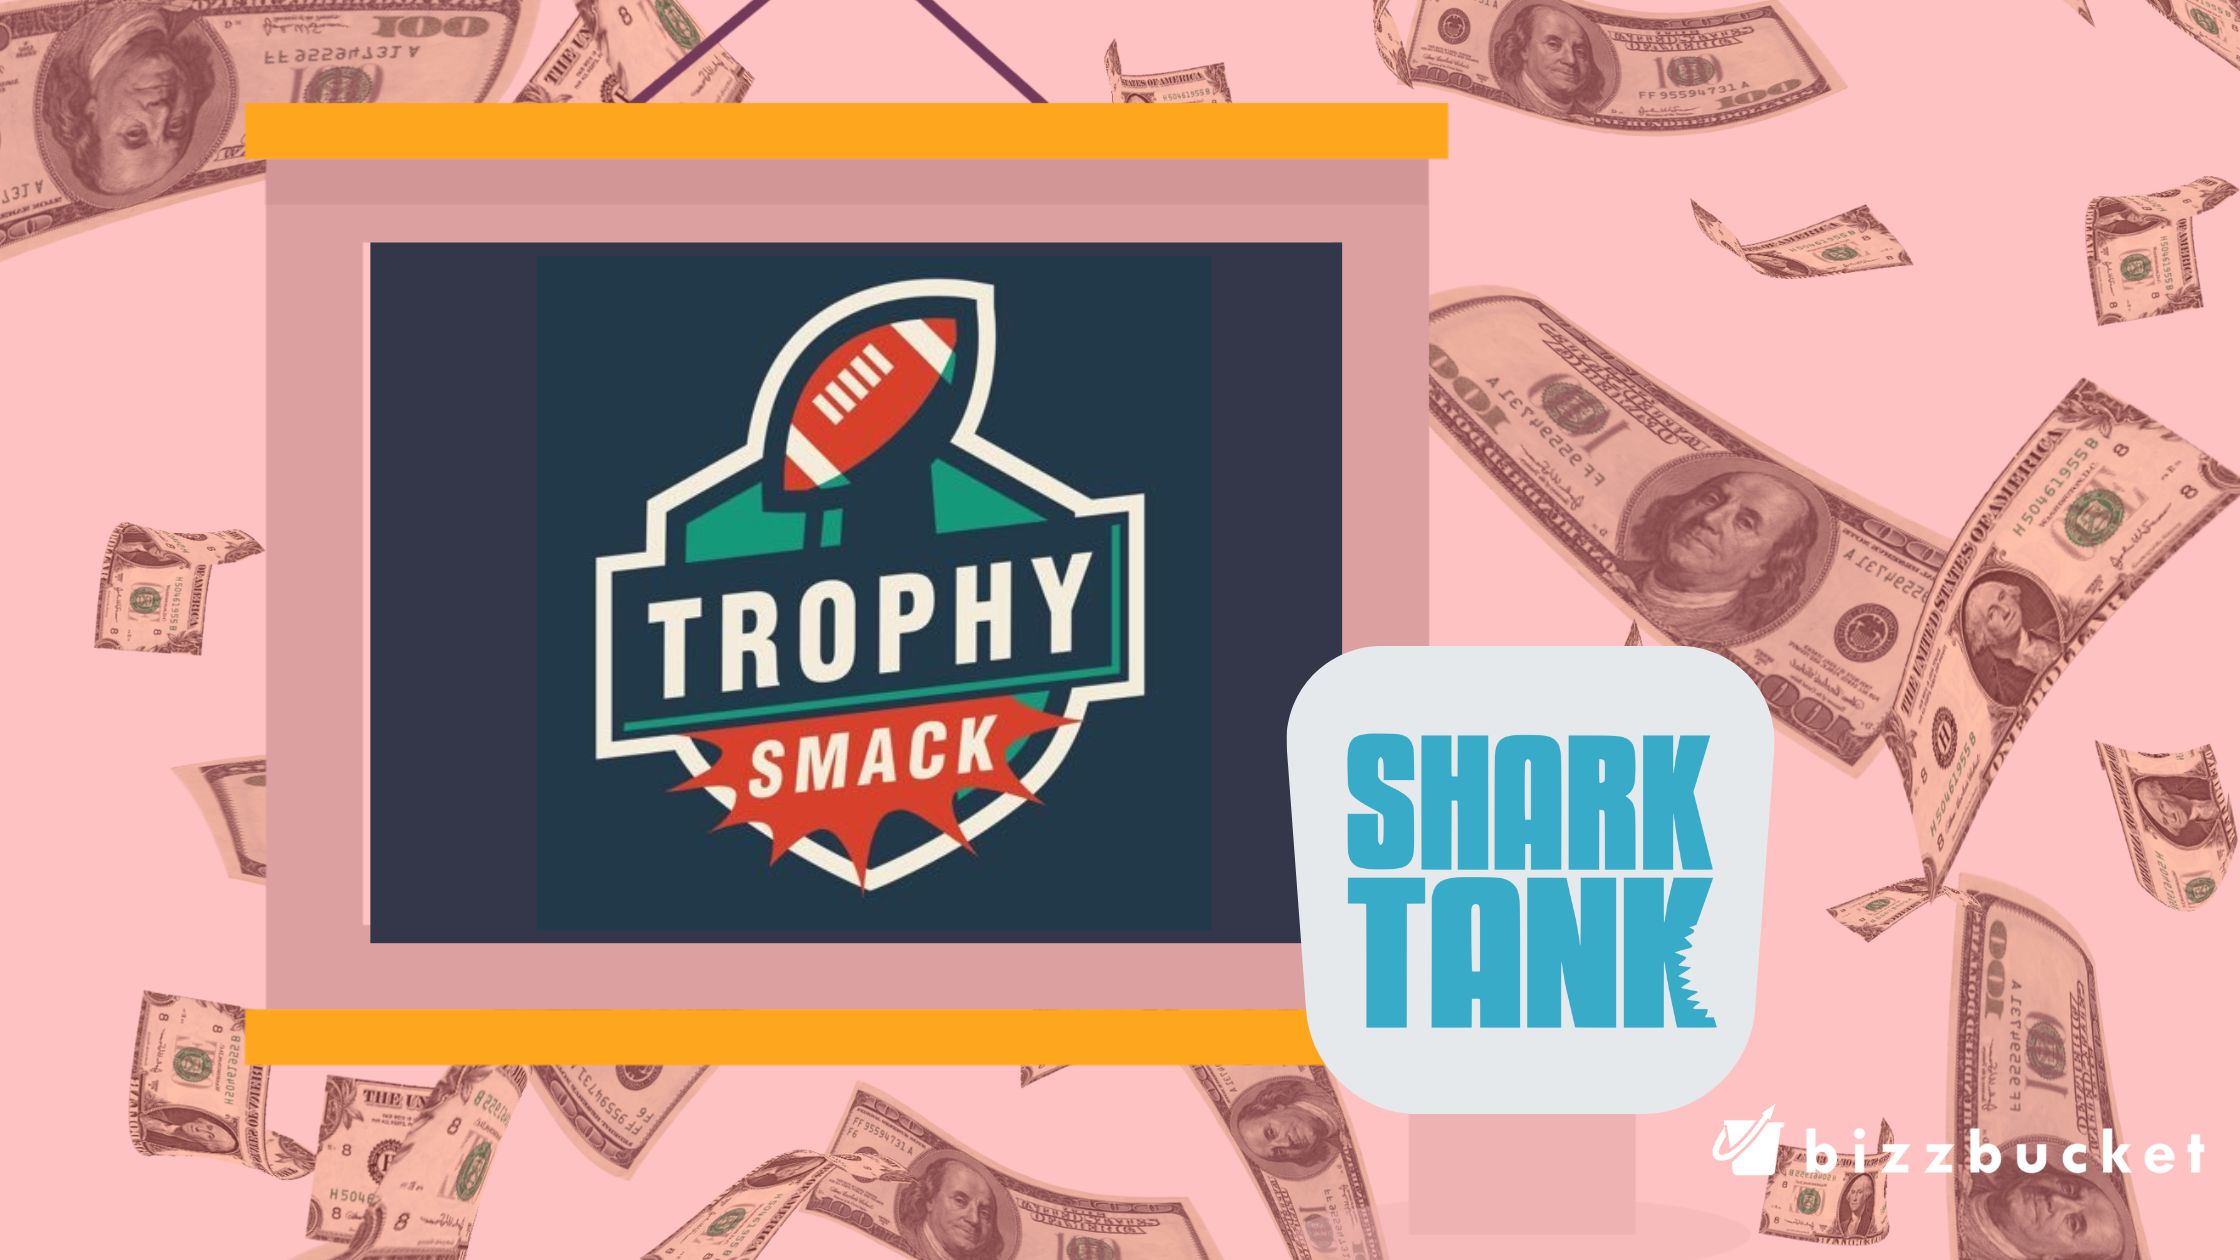 Trophy Smack shark tank